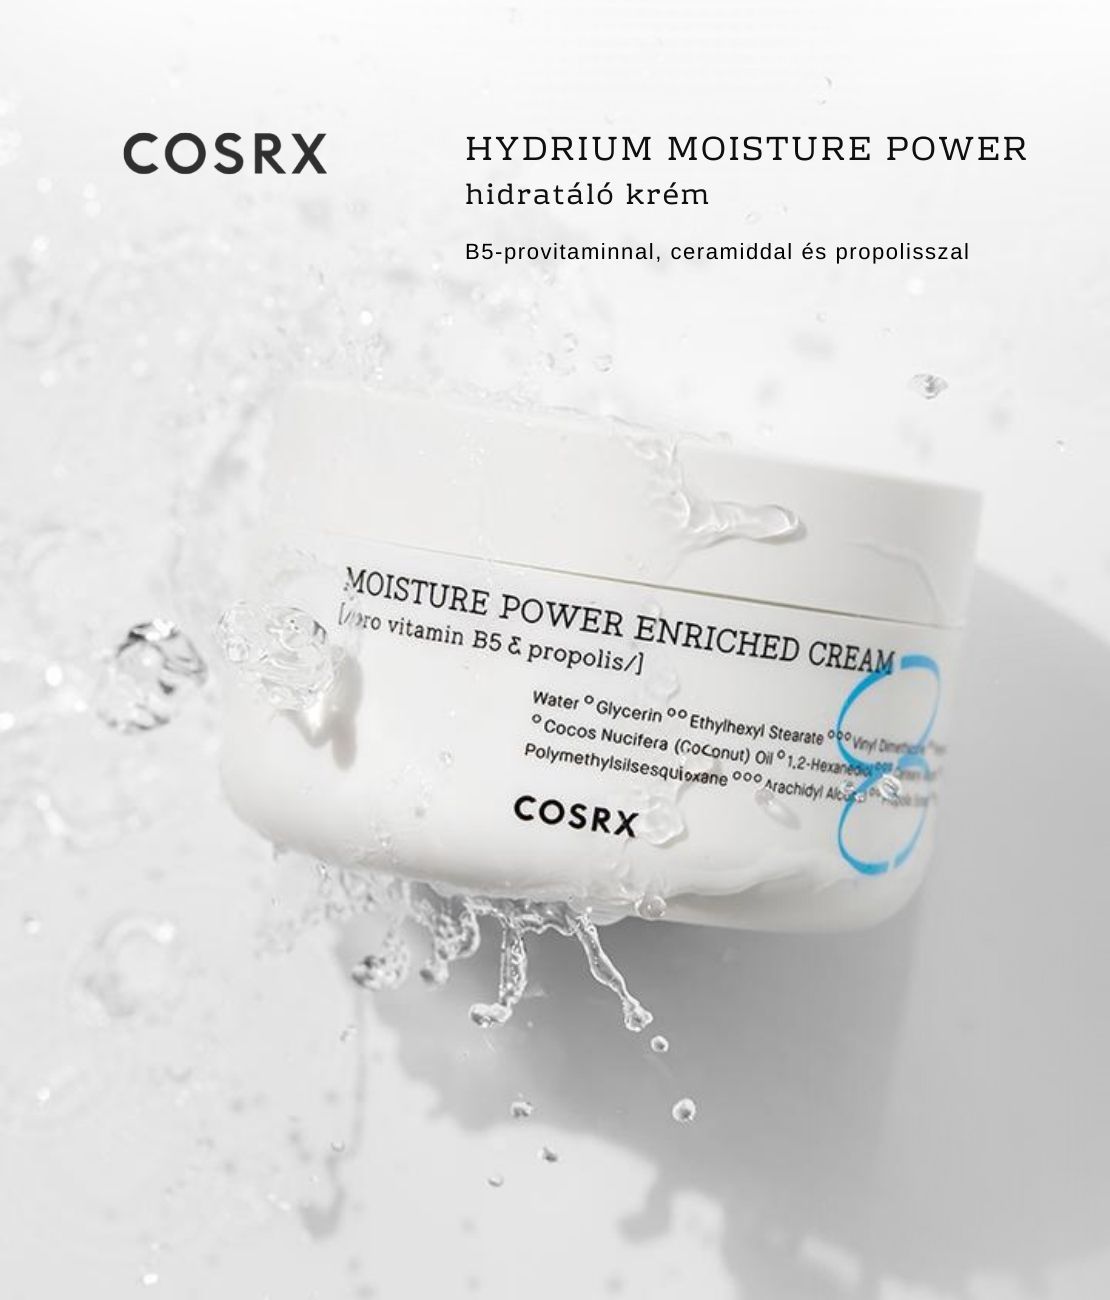 COSRX-Hydrium-Moisture-Power-hidratalo-krem-leiras